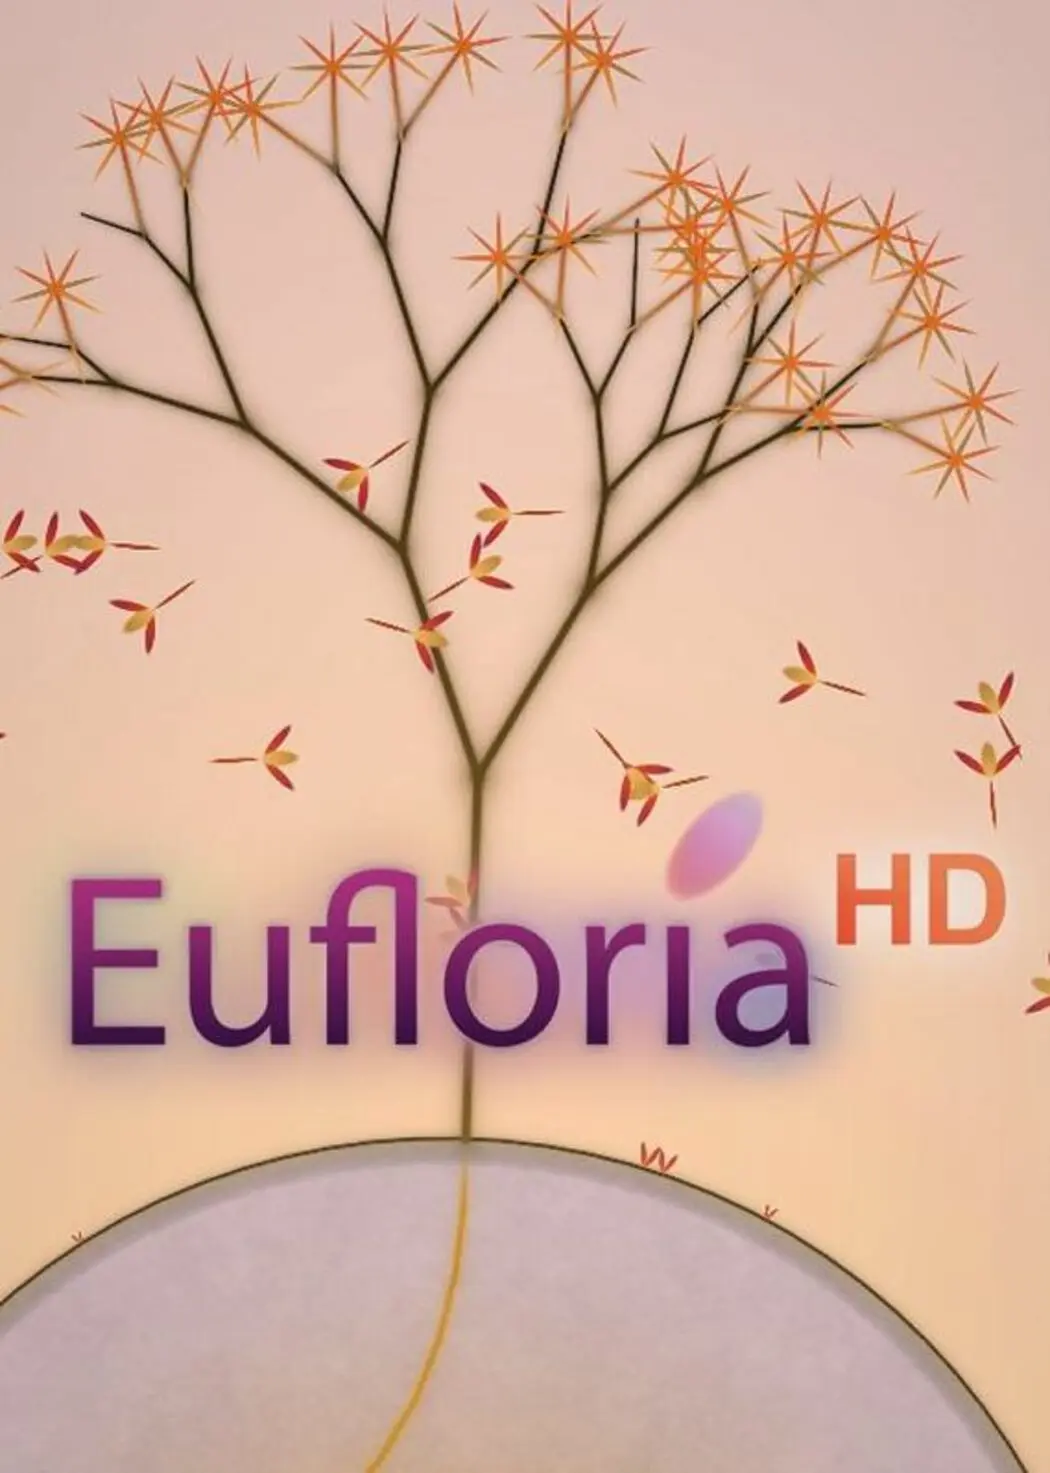 Eufloria HD Deluxe Edition (PC / Mac / Linux) - Steam - Digital Code